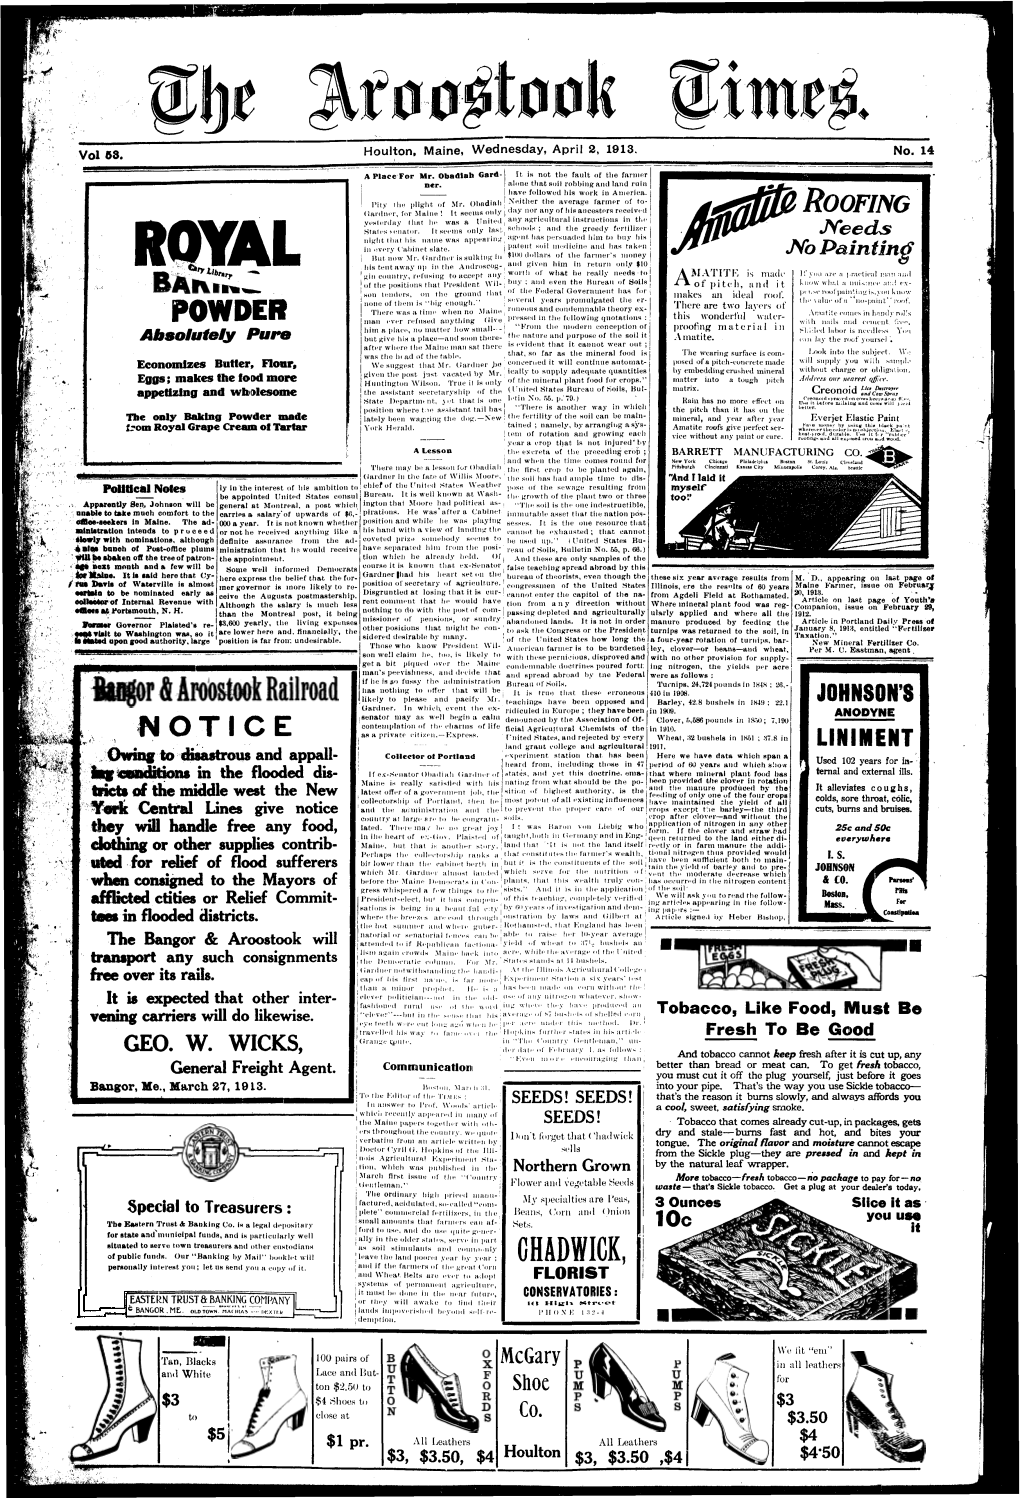 The Aroostook Times, April 2, 1913